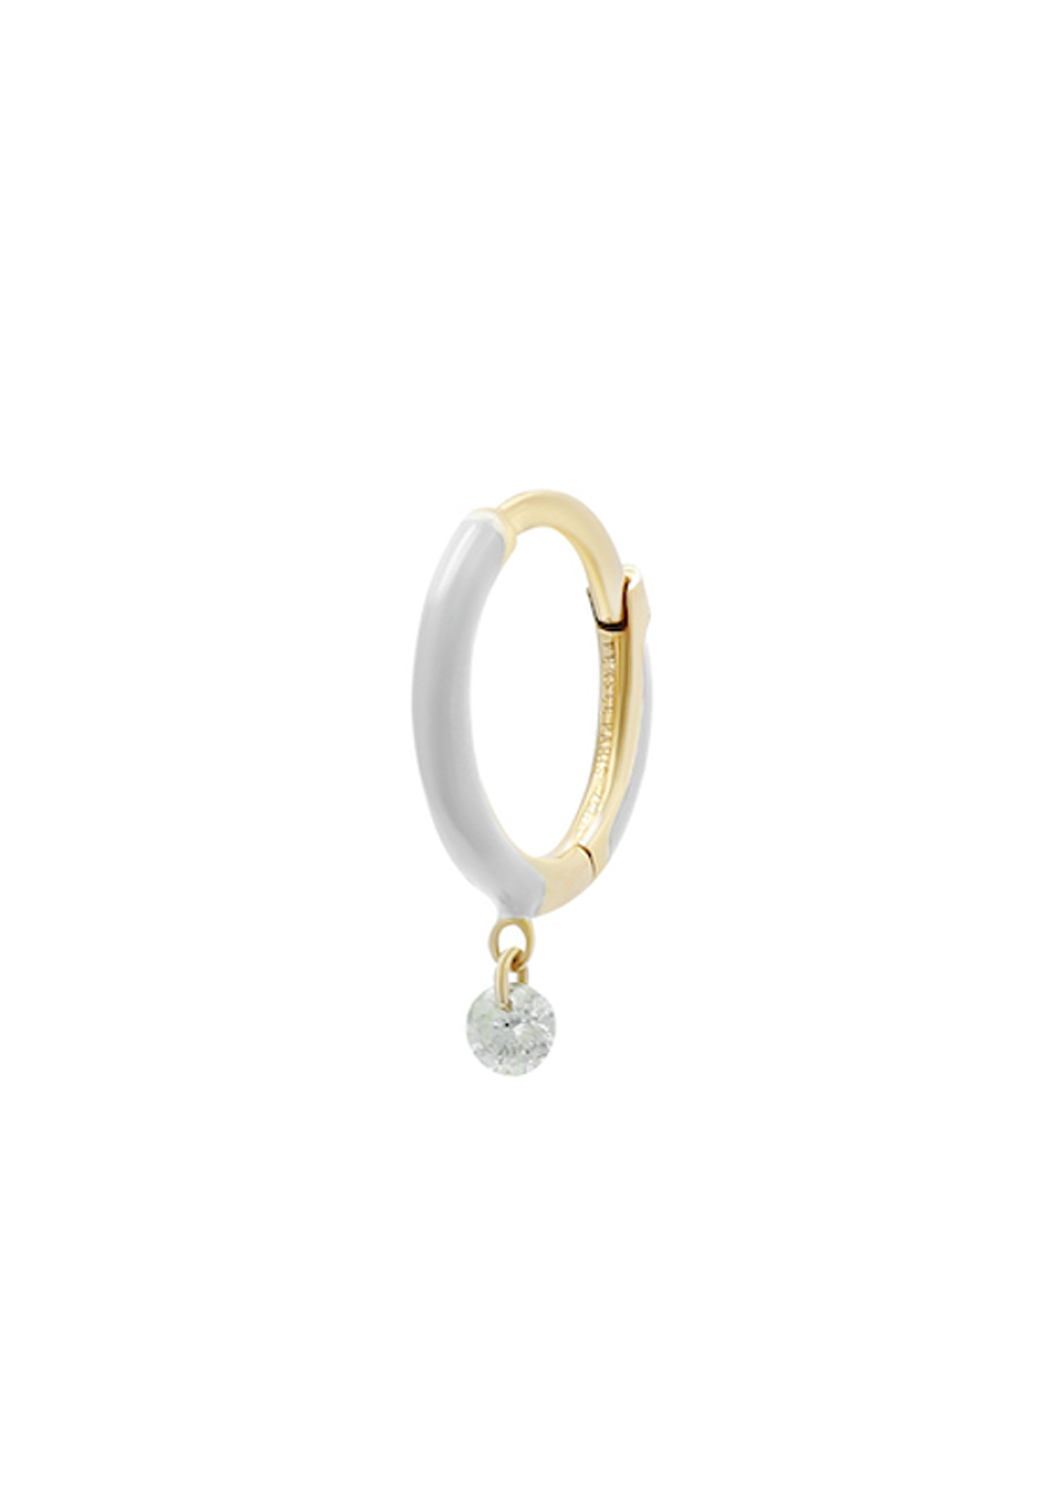 Persée Paris 18KYG Diamond & White Enamel Hoop Earring | Ref. EA82774- WT-YG | OsterJeweler.com